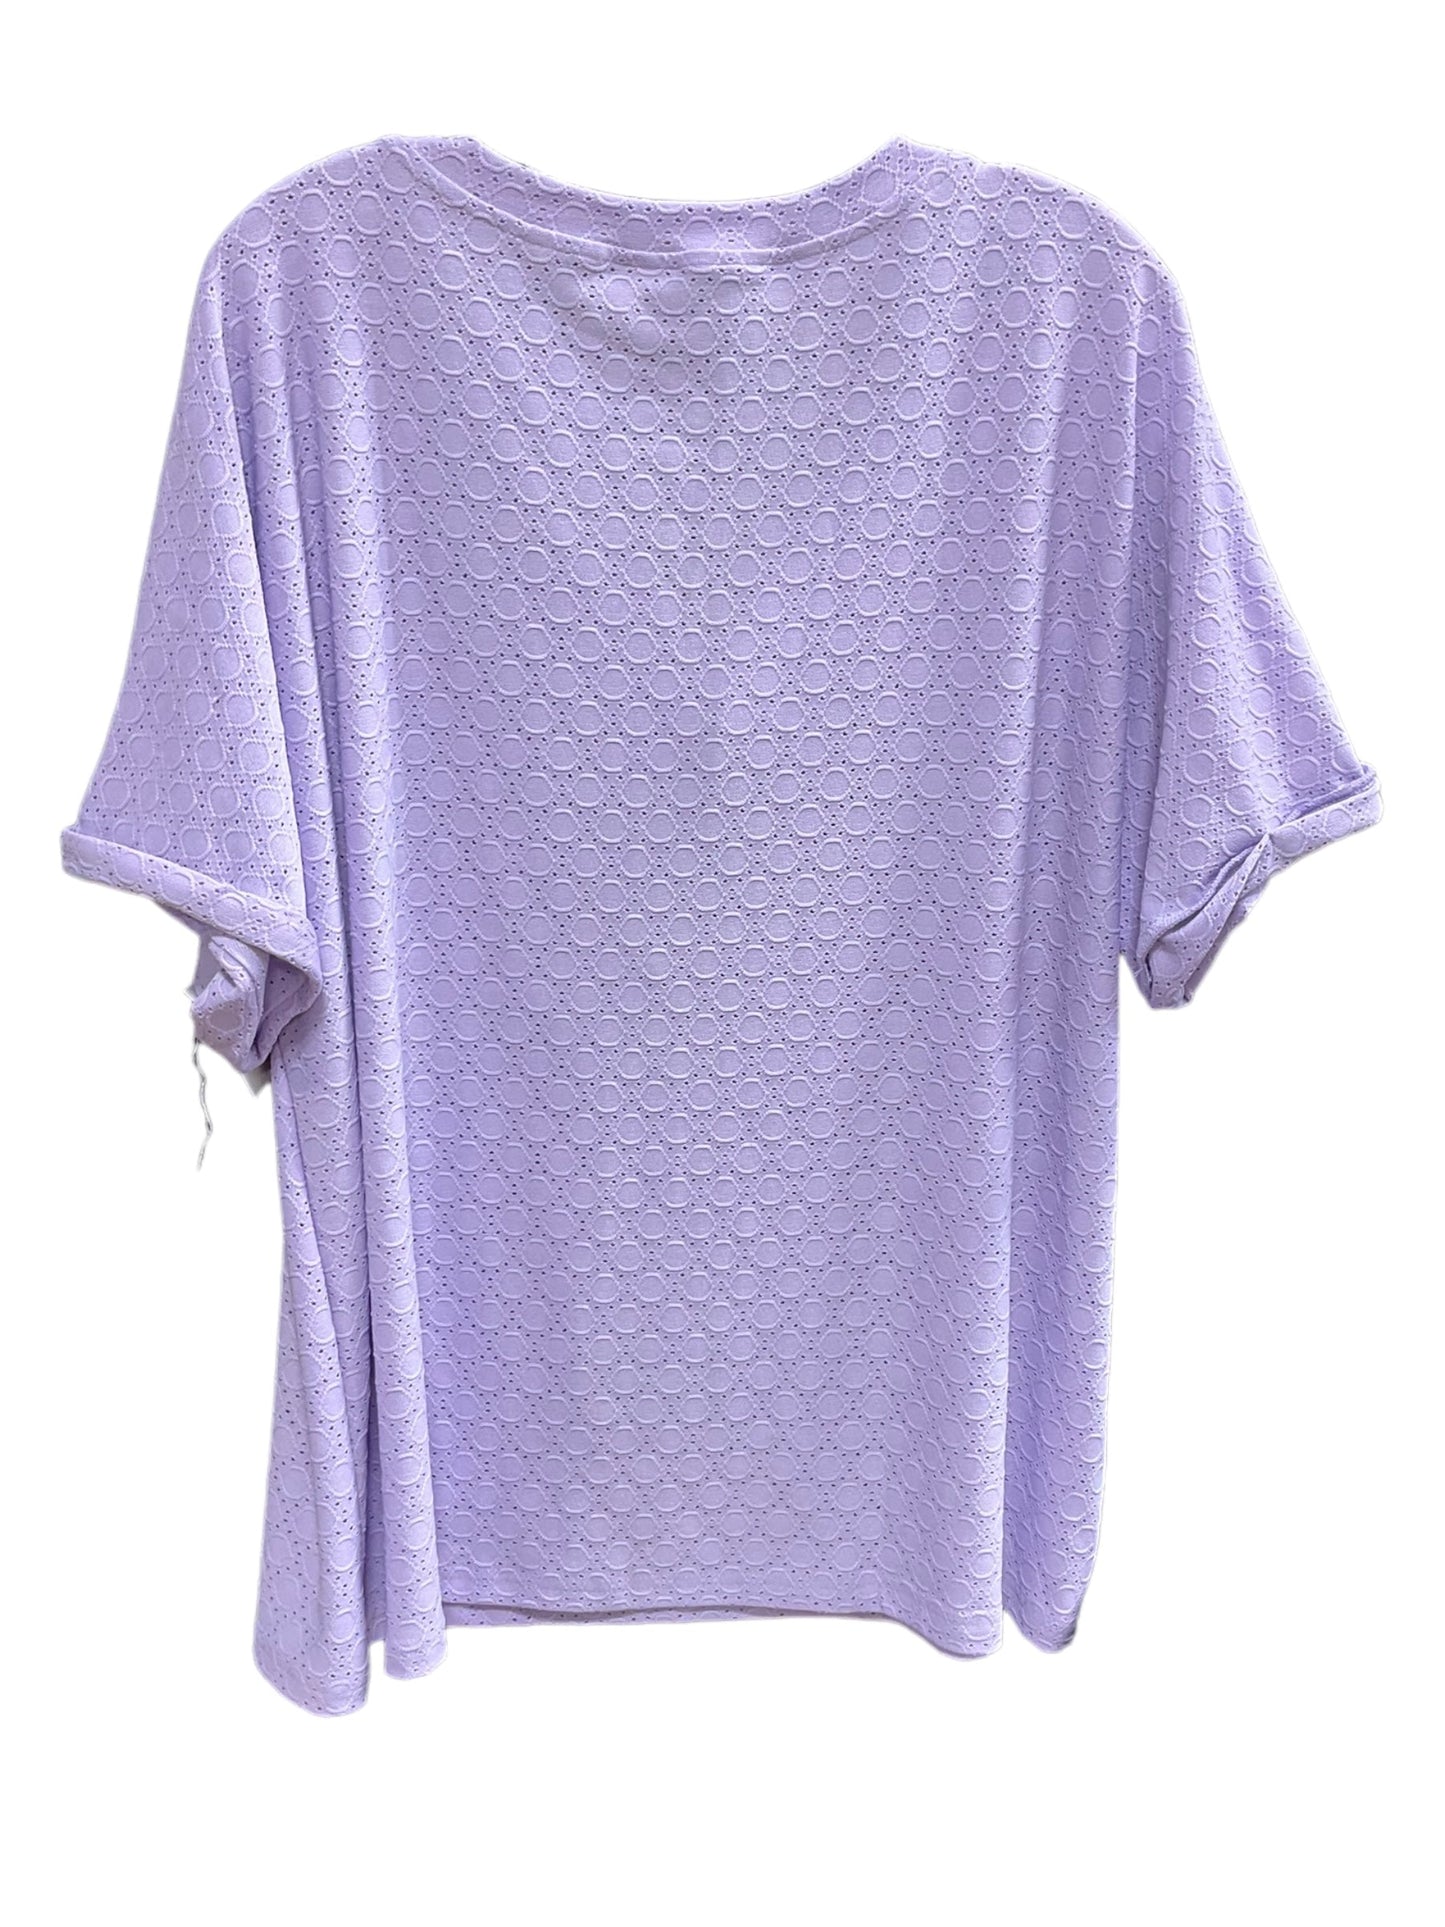 Purple Top Short Sleeve Basic Cmf, Size 2x